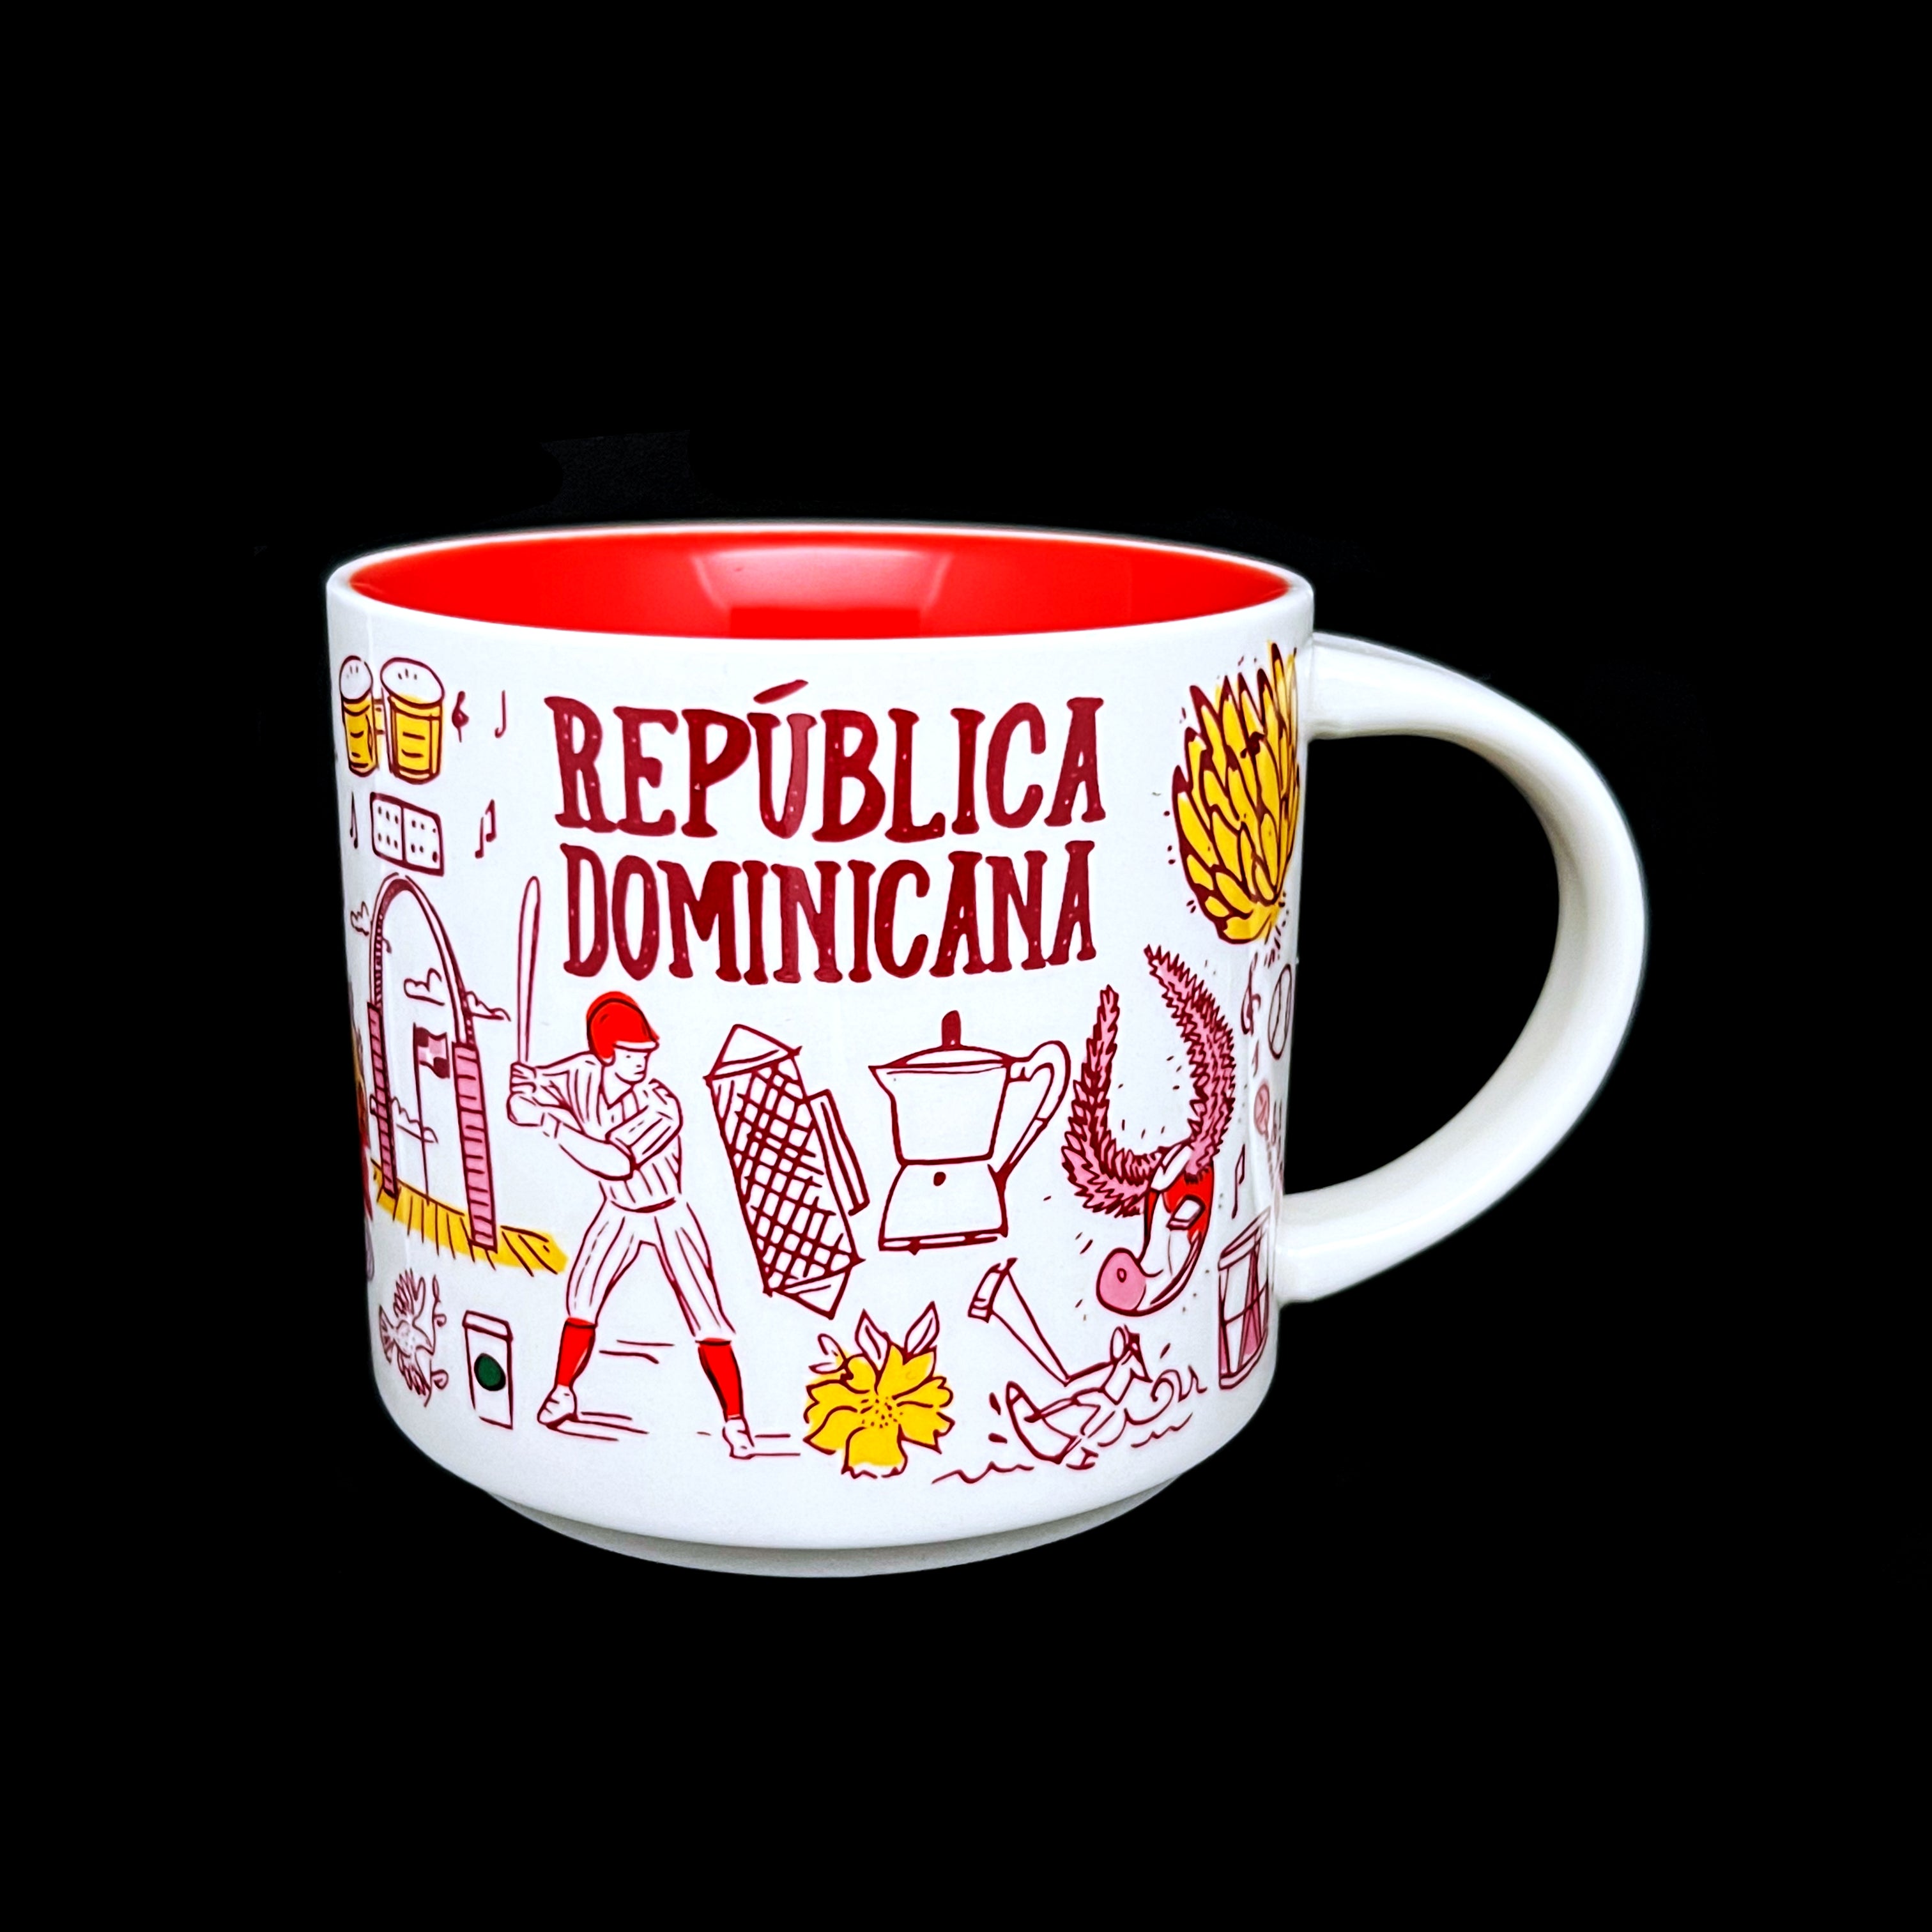 Starbucks Coffee Kaffee Tasse Tee Becher Bilder Motive Collectibles Cup Mug, República Dominicana, Dominikanische Republik